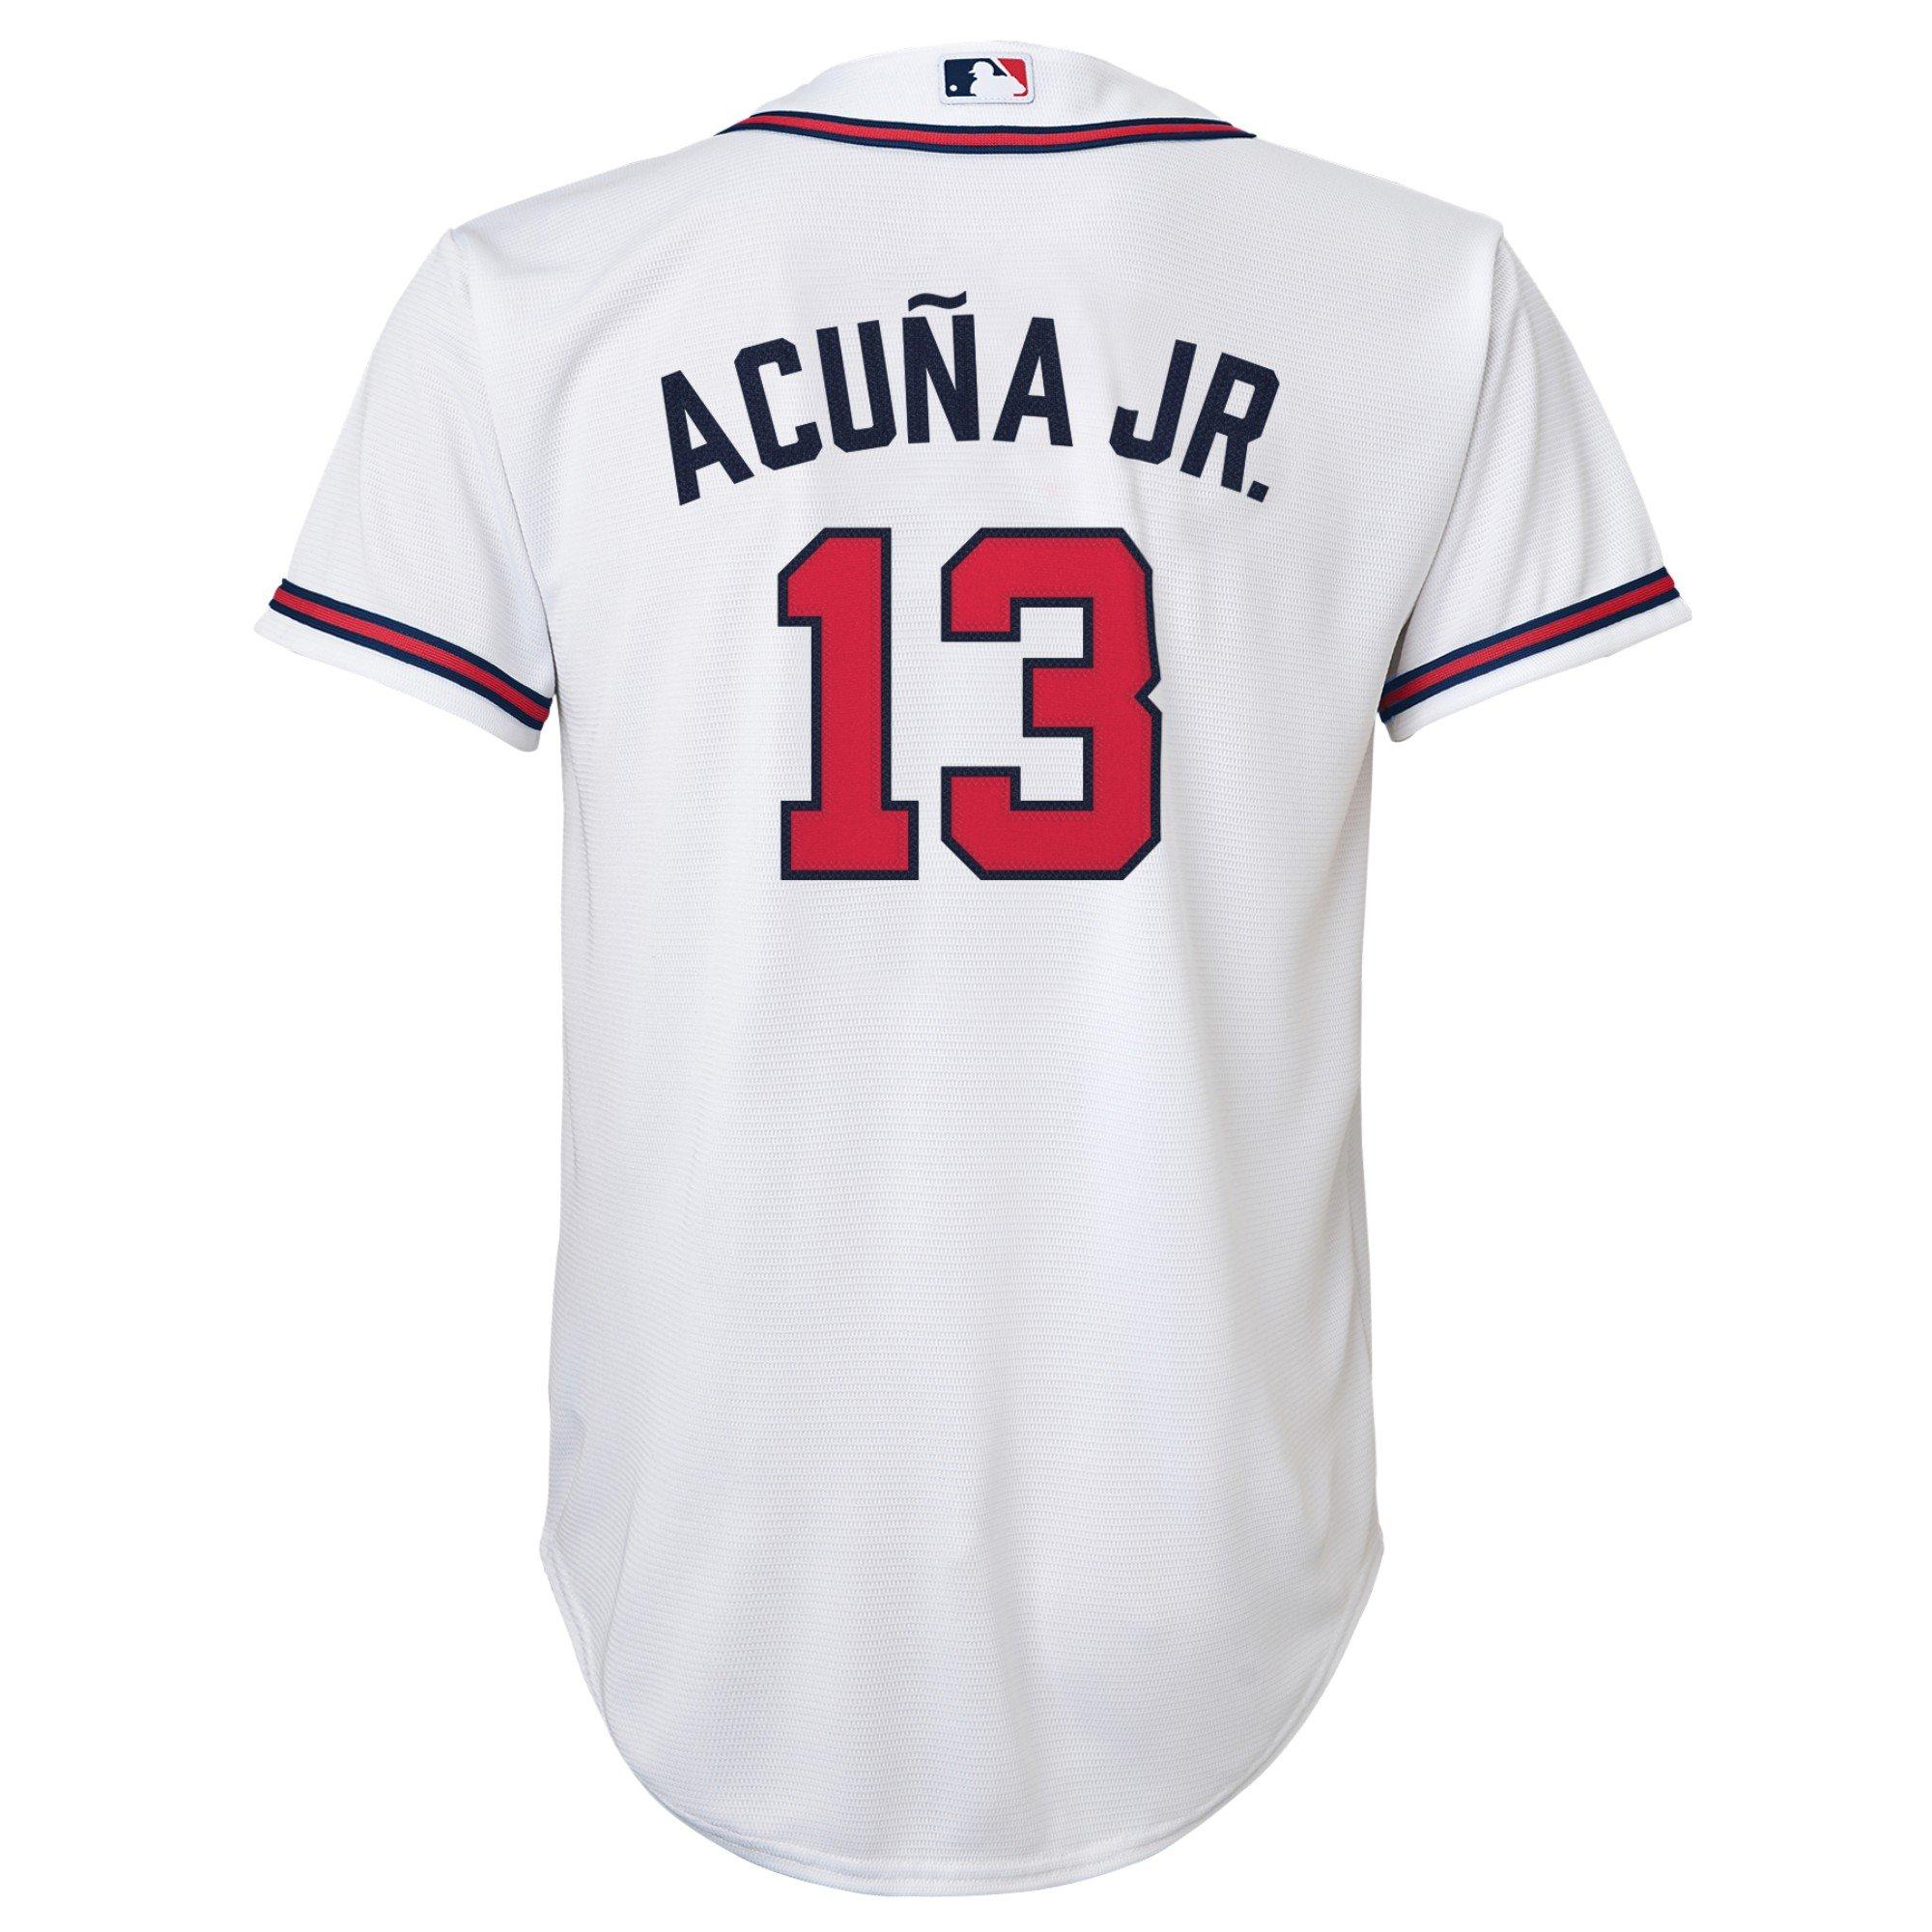  Ronald Acuna Jr. Atlanta Braves MLB Boys Youth 8-20 Player  Jersey (Navy Alternate, Youth Large 14-16) : Sports & Outdoors